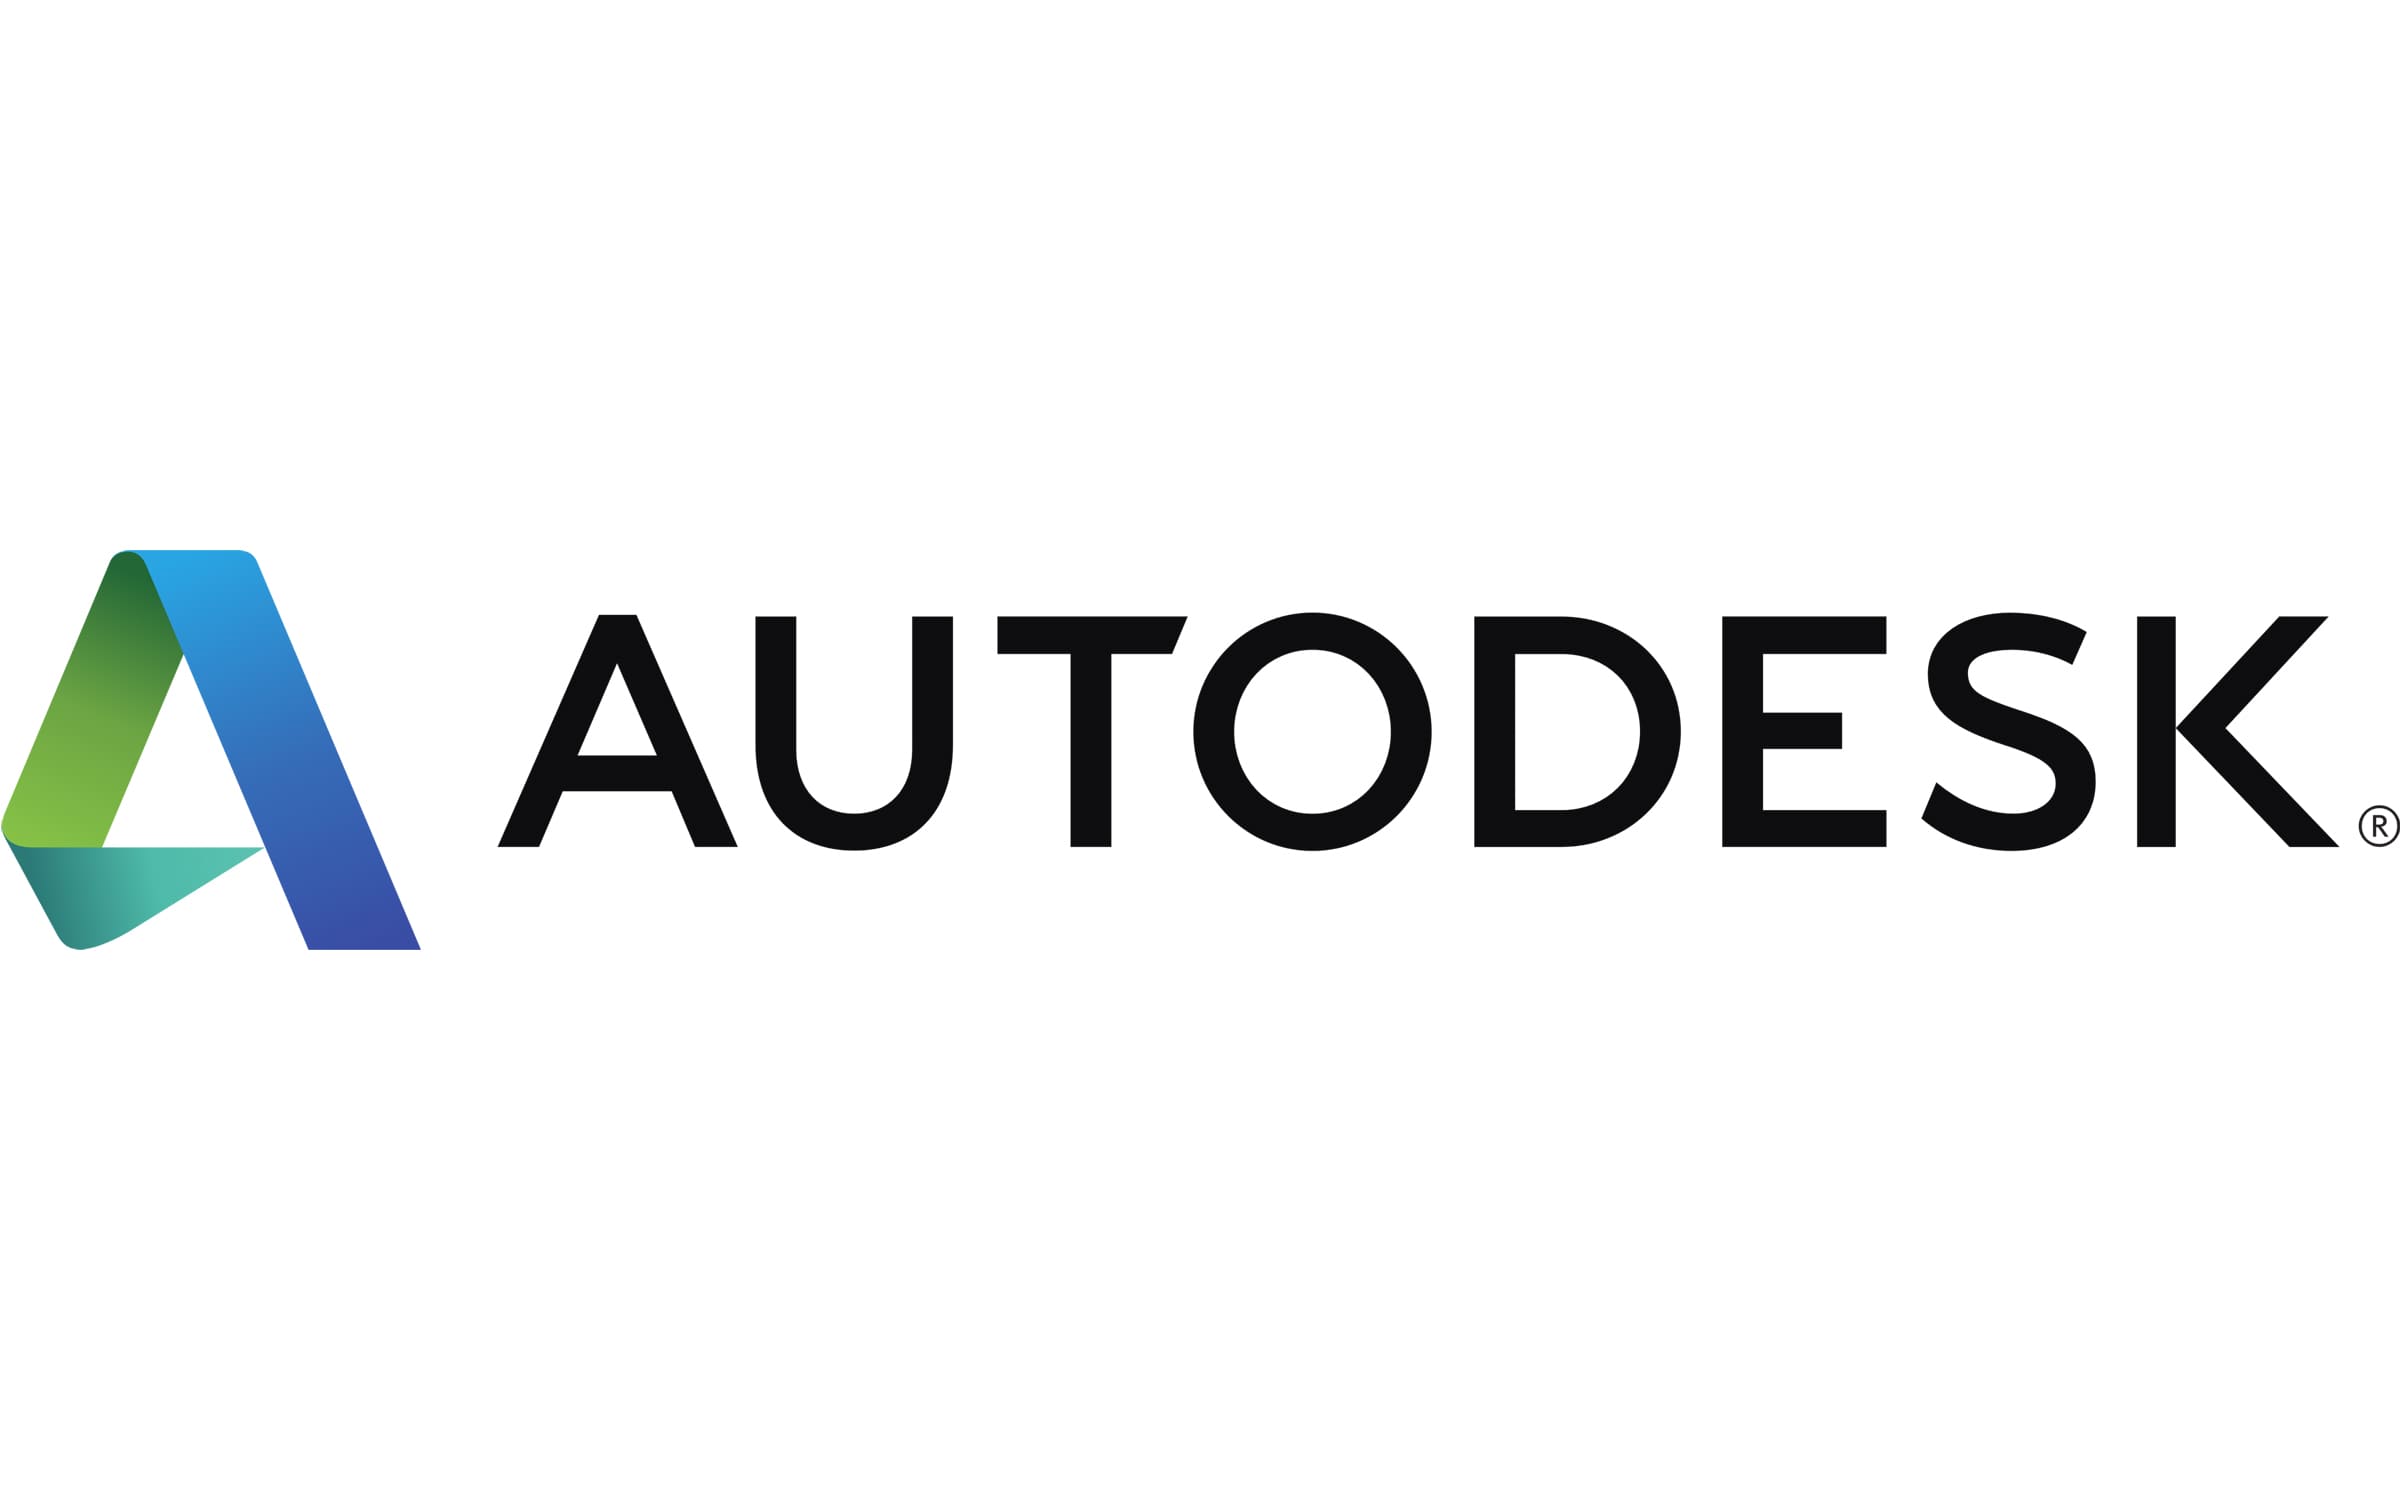 Autodesk Recruitment